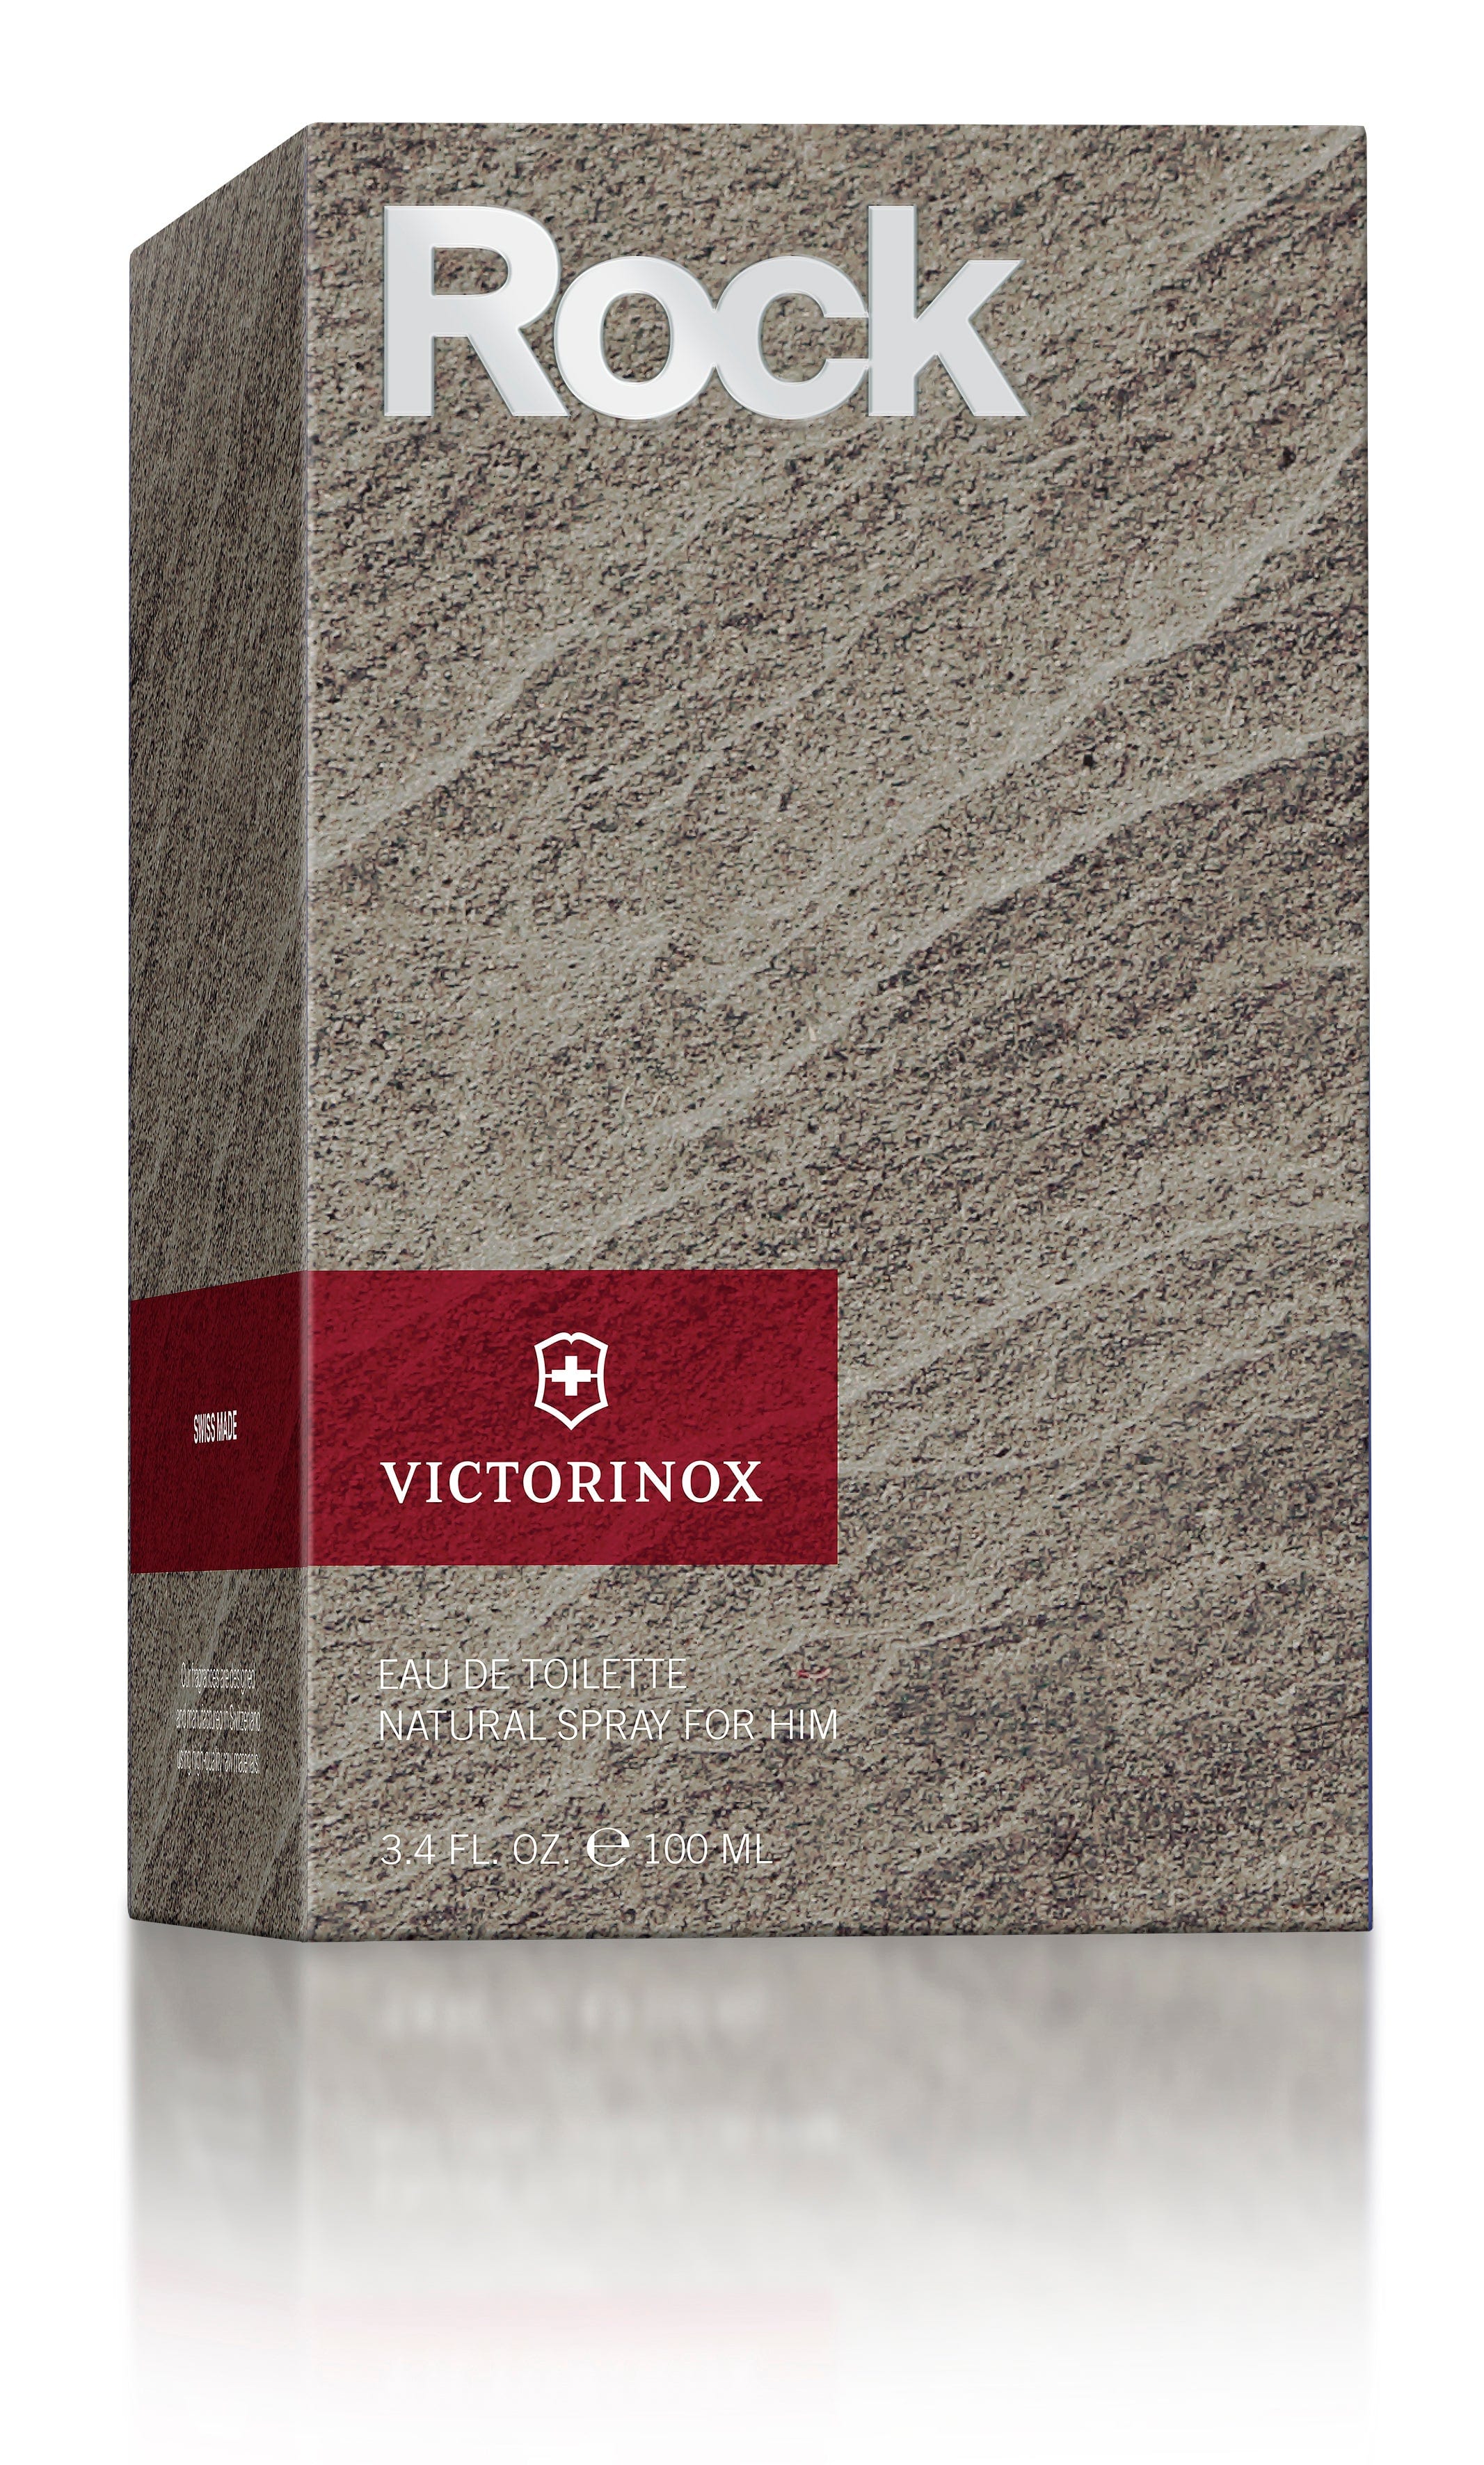 Victorinox Rock for Him EDT 100ml